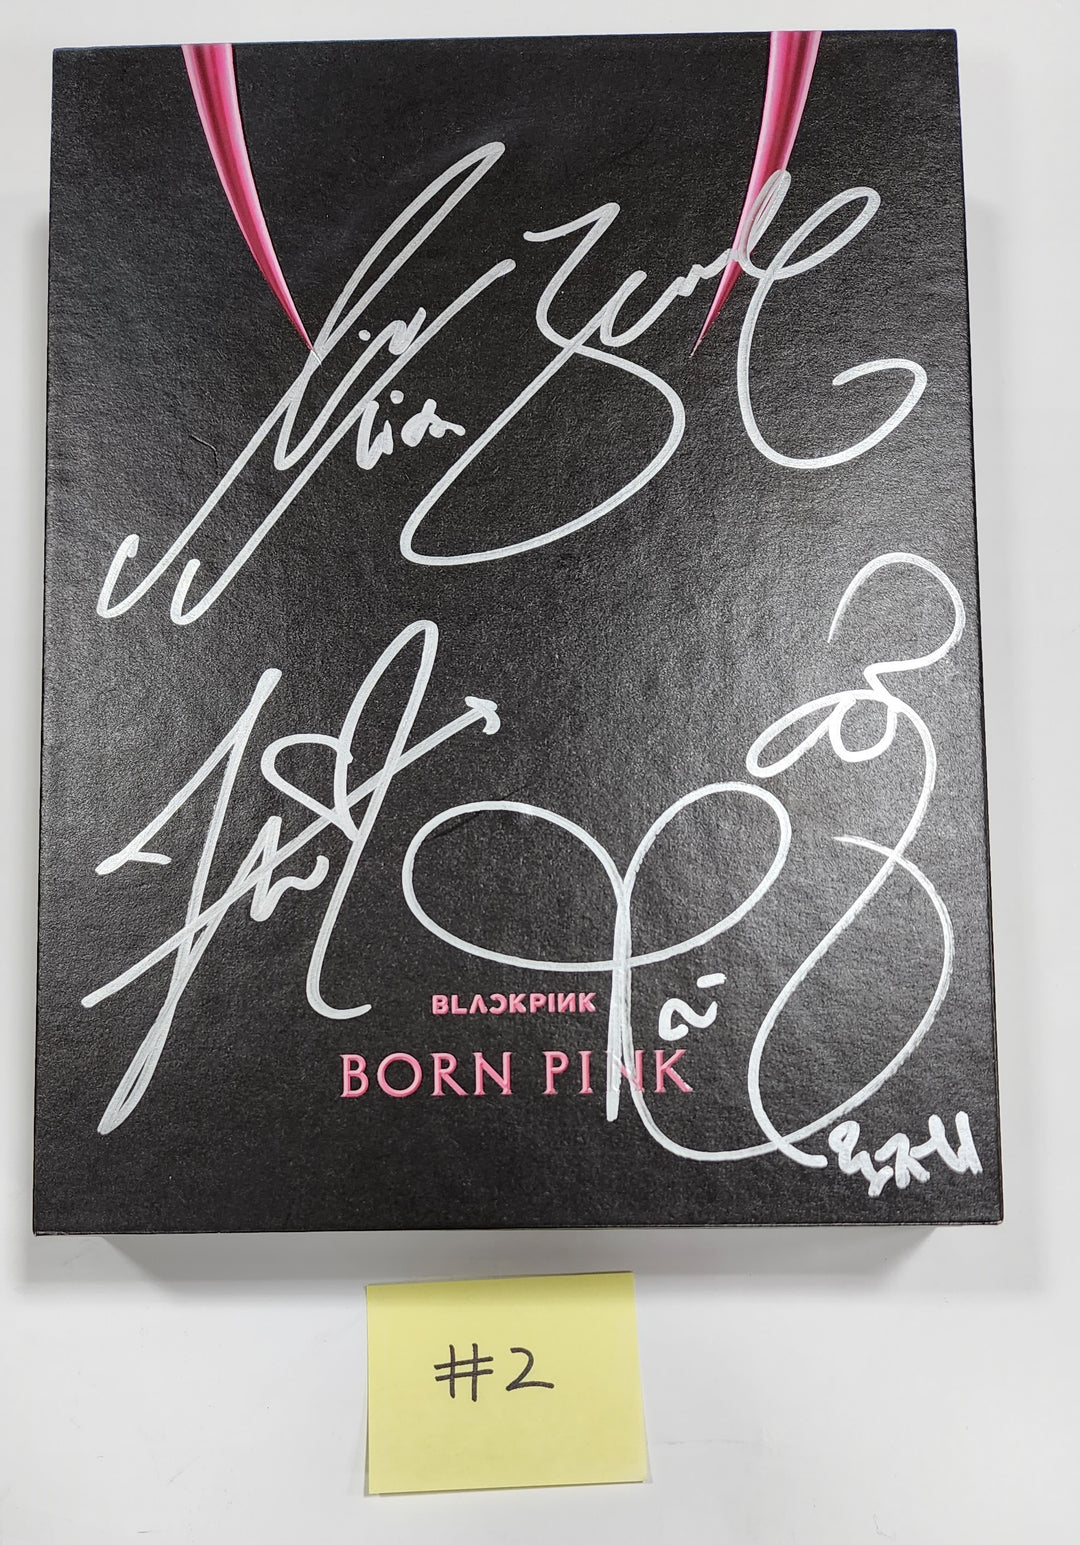 BLACK PINK "Born Pink" - Hand Autographed(Signed) Album